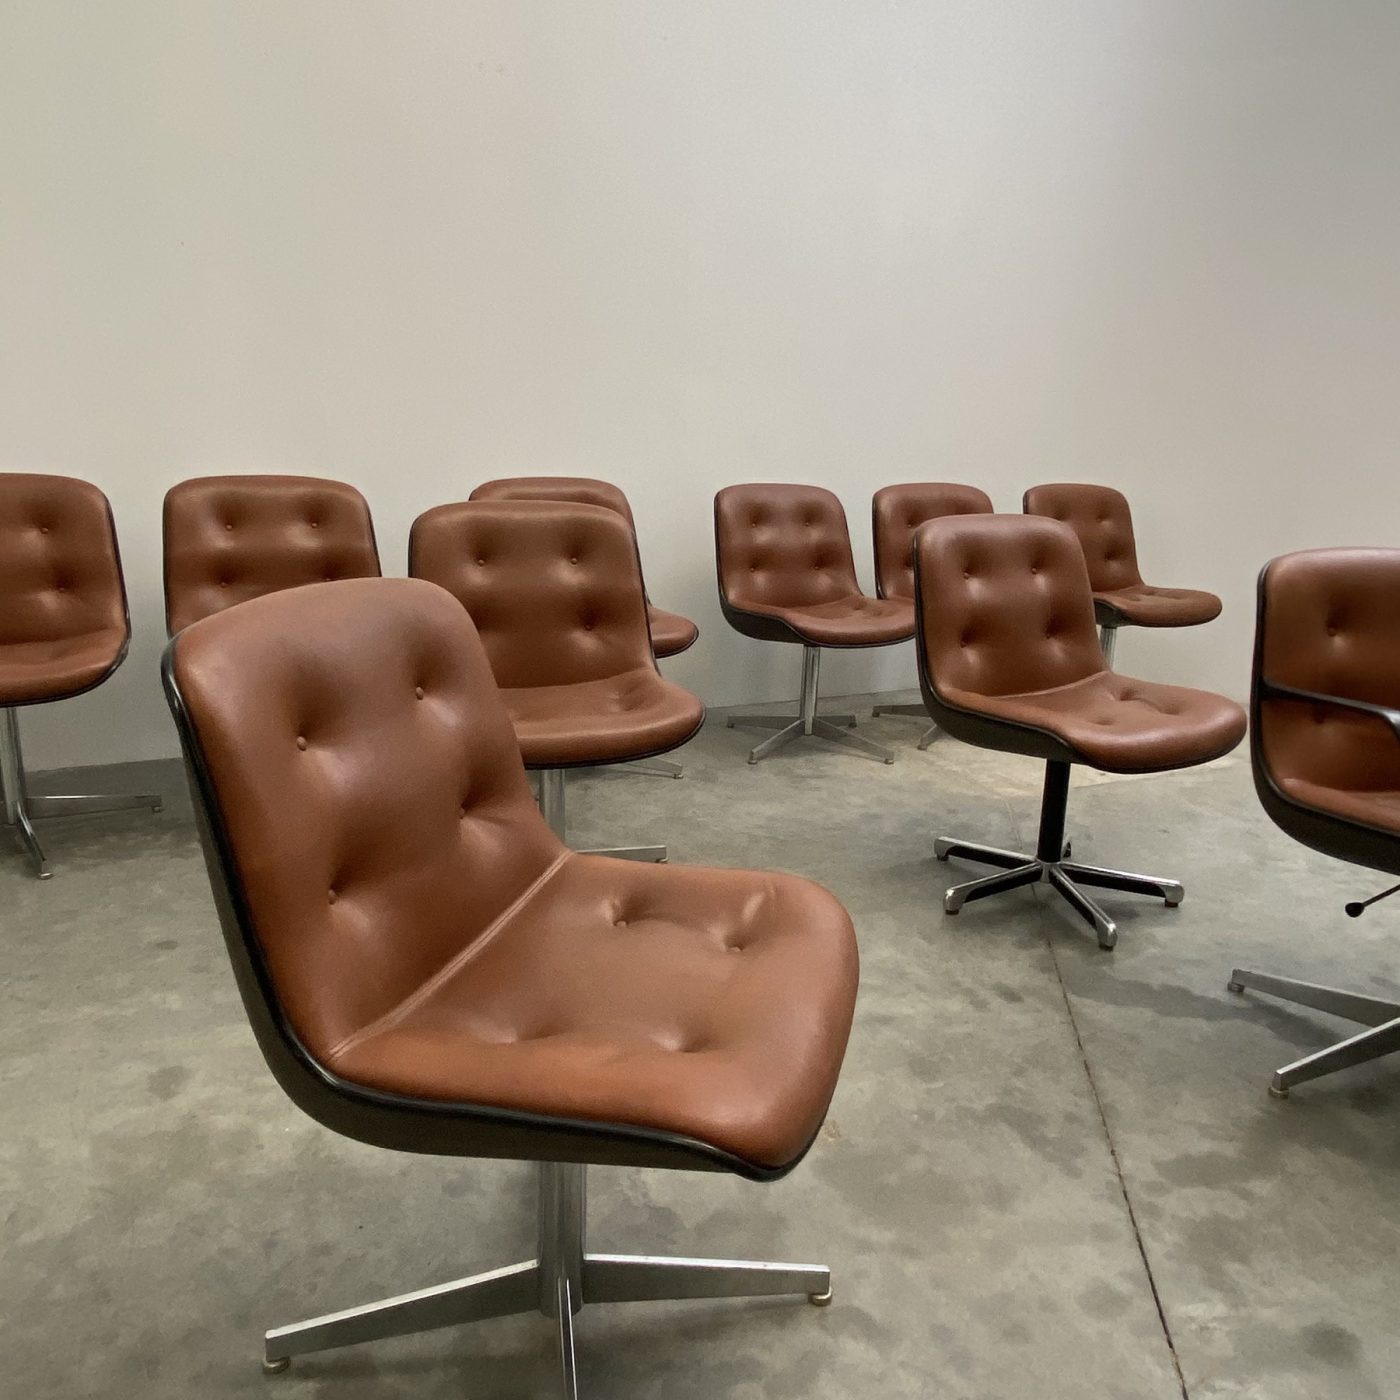 objet-vagabond-vintage-chairs0011